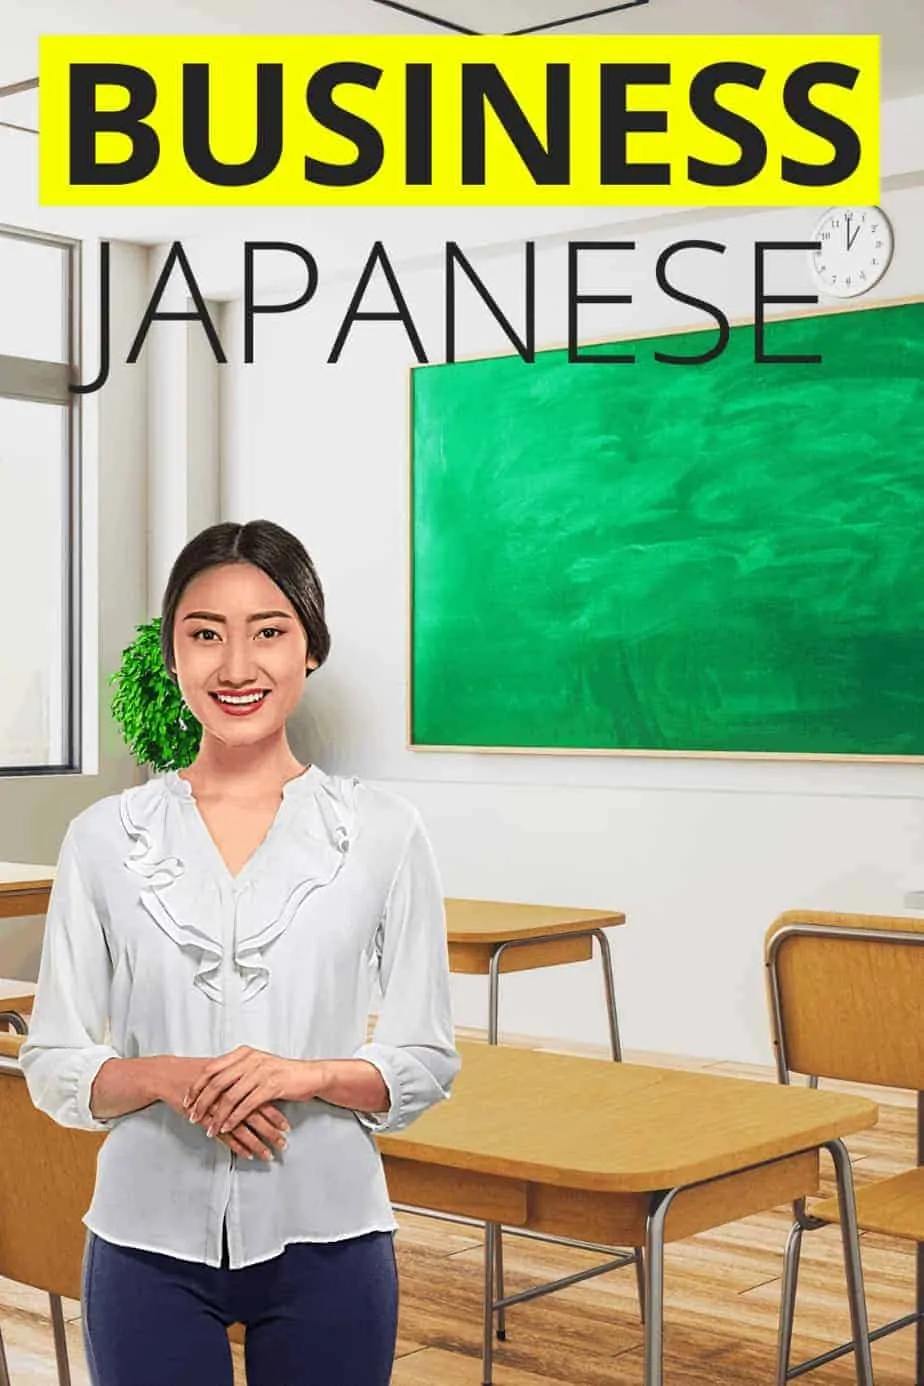 Business Japanese Vocabulary Pinterest Updated